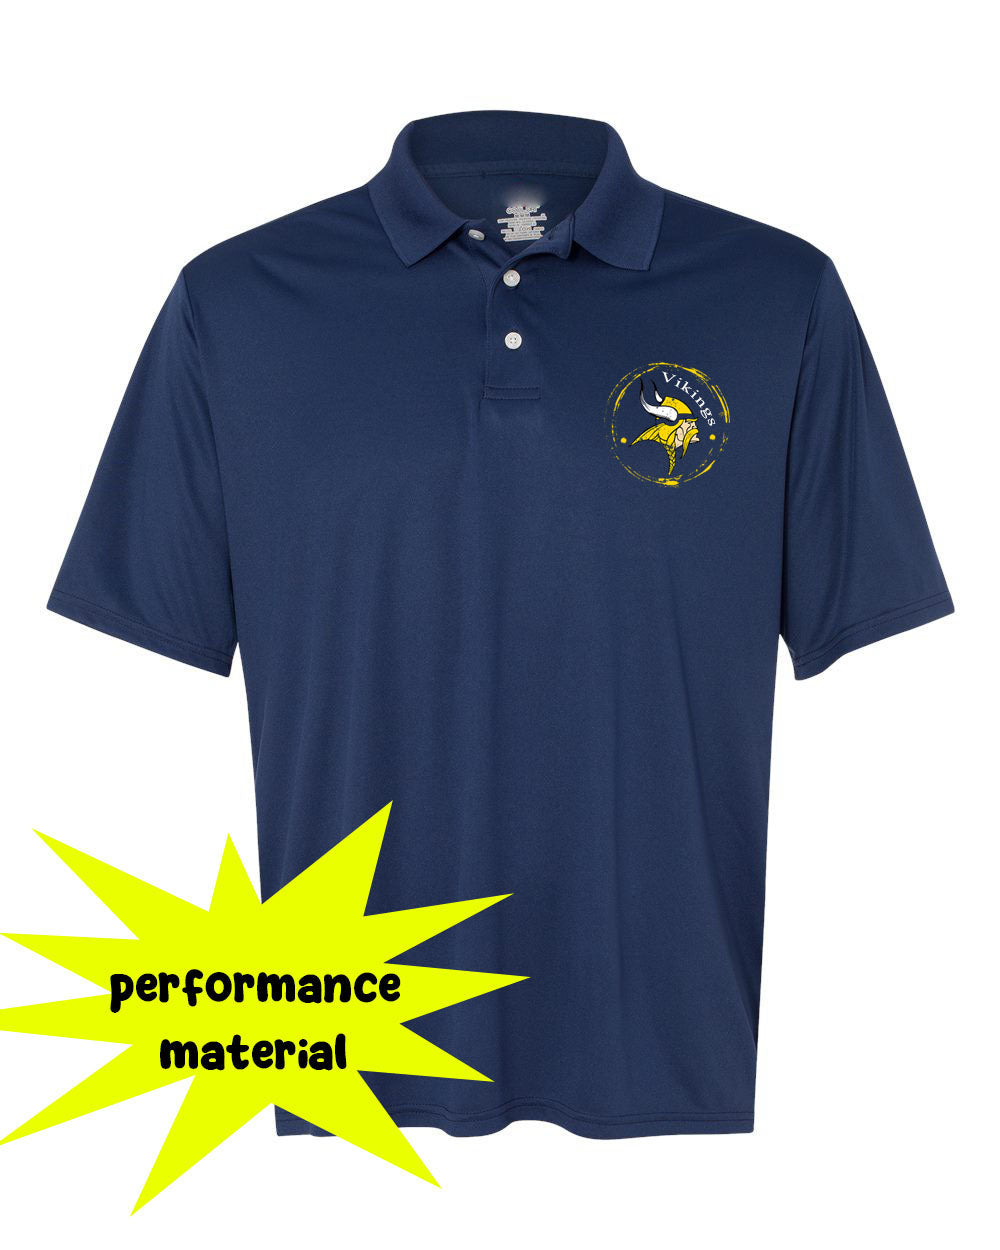 Glen Meadow Design 3 Performance Material Polo T-Shirt